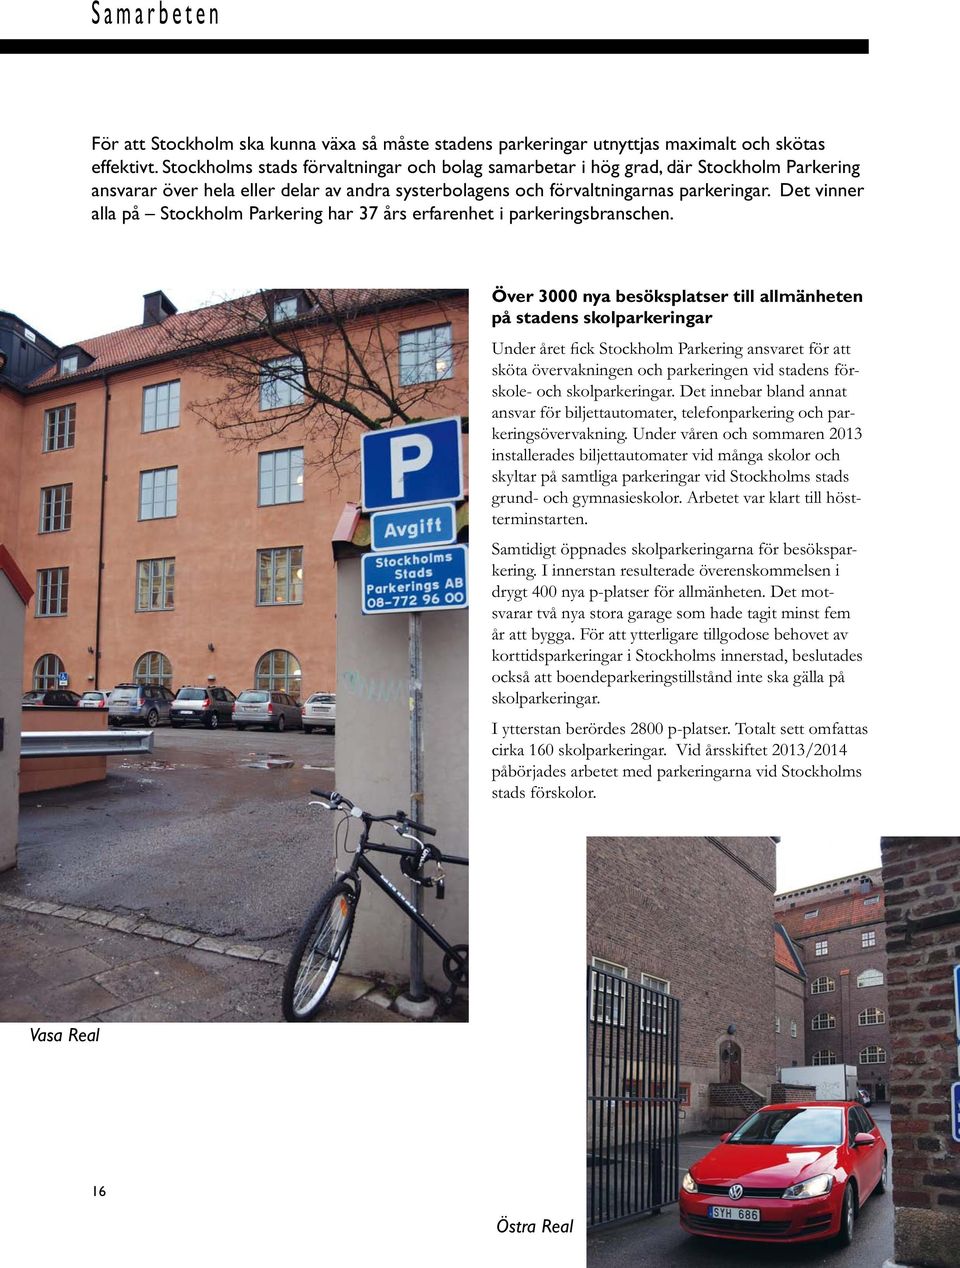 Det vier alla på Stockholm Parkerig har 37 års erfarehet i parkerigsbrasche.